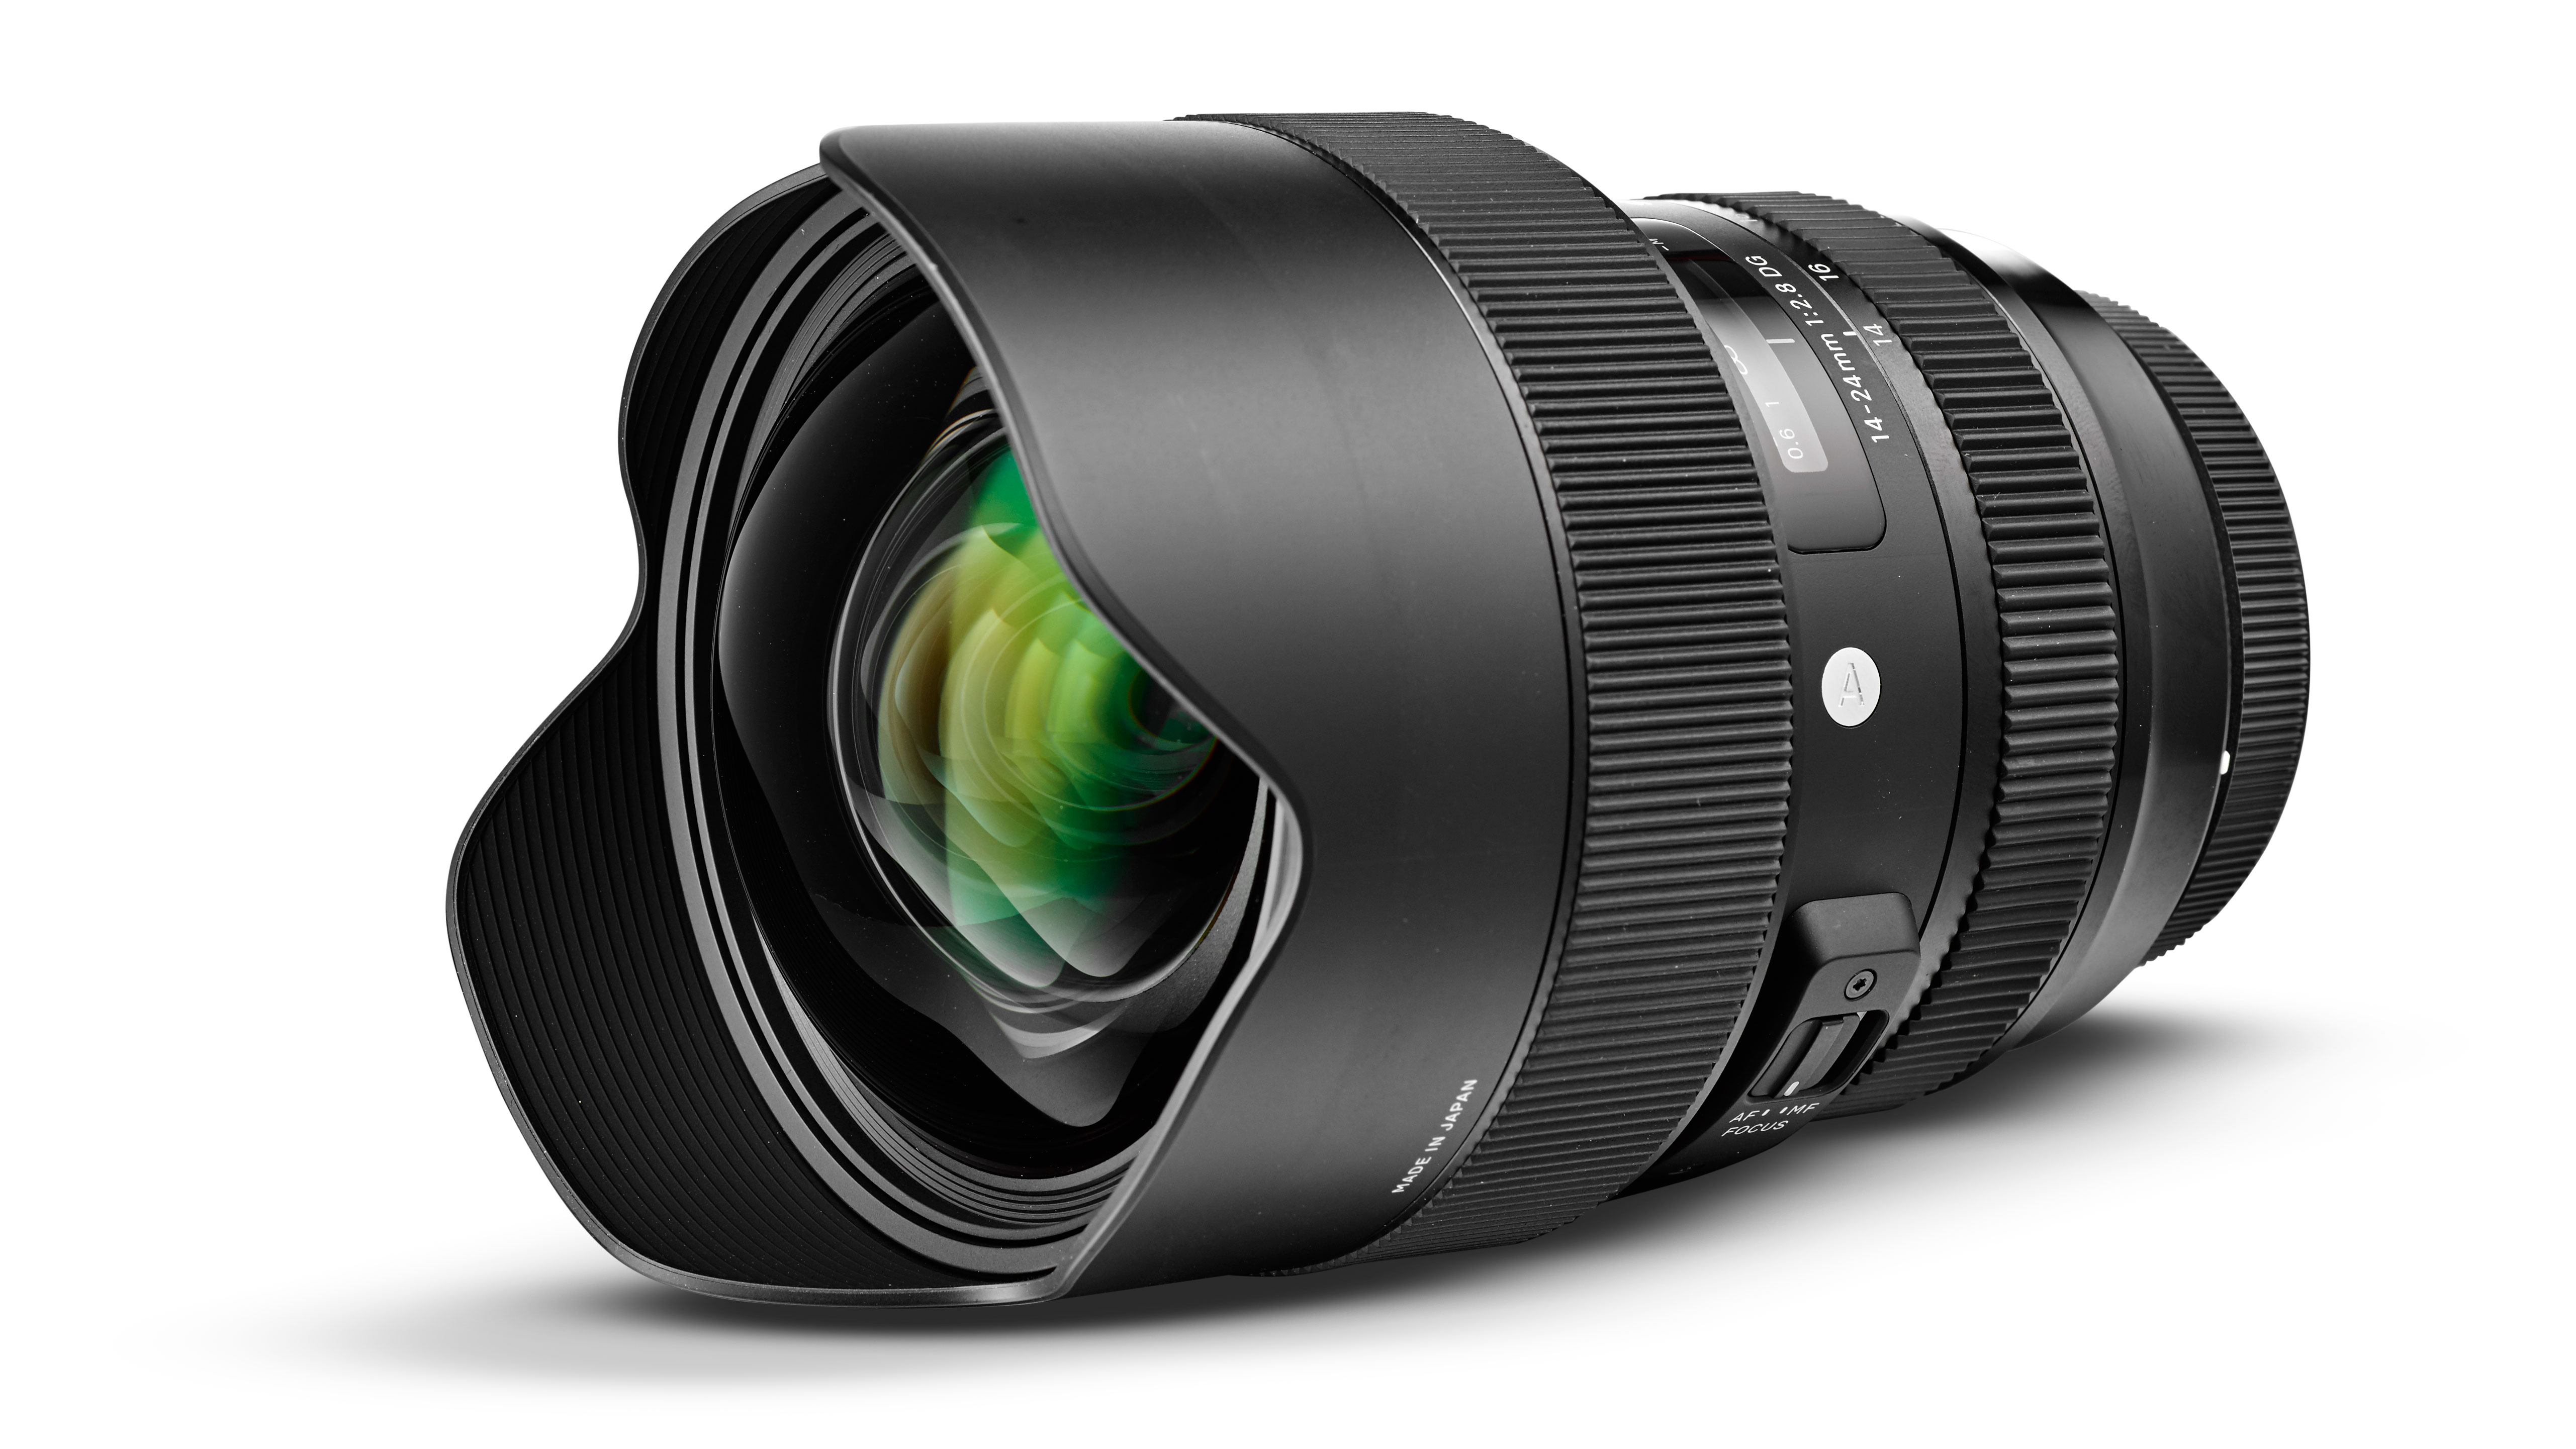 Sigma 14-24mm f/2.8 DG HSM | A review | Digital Camera World